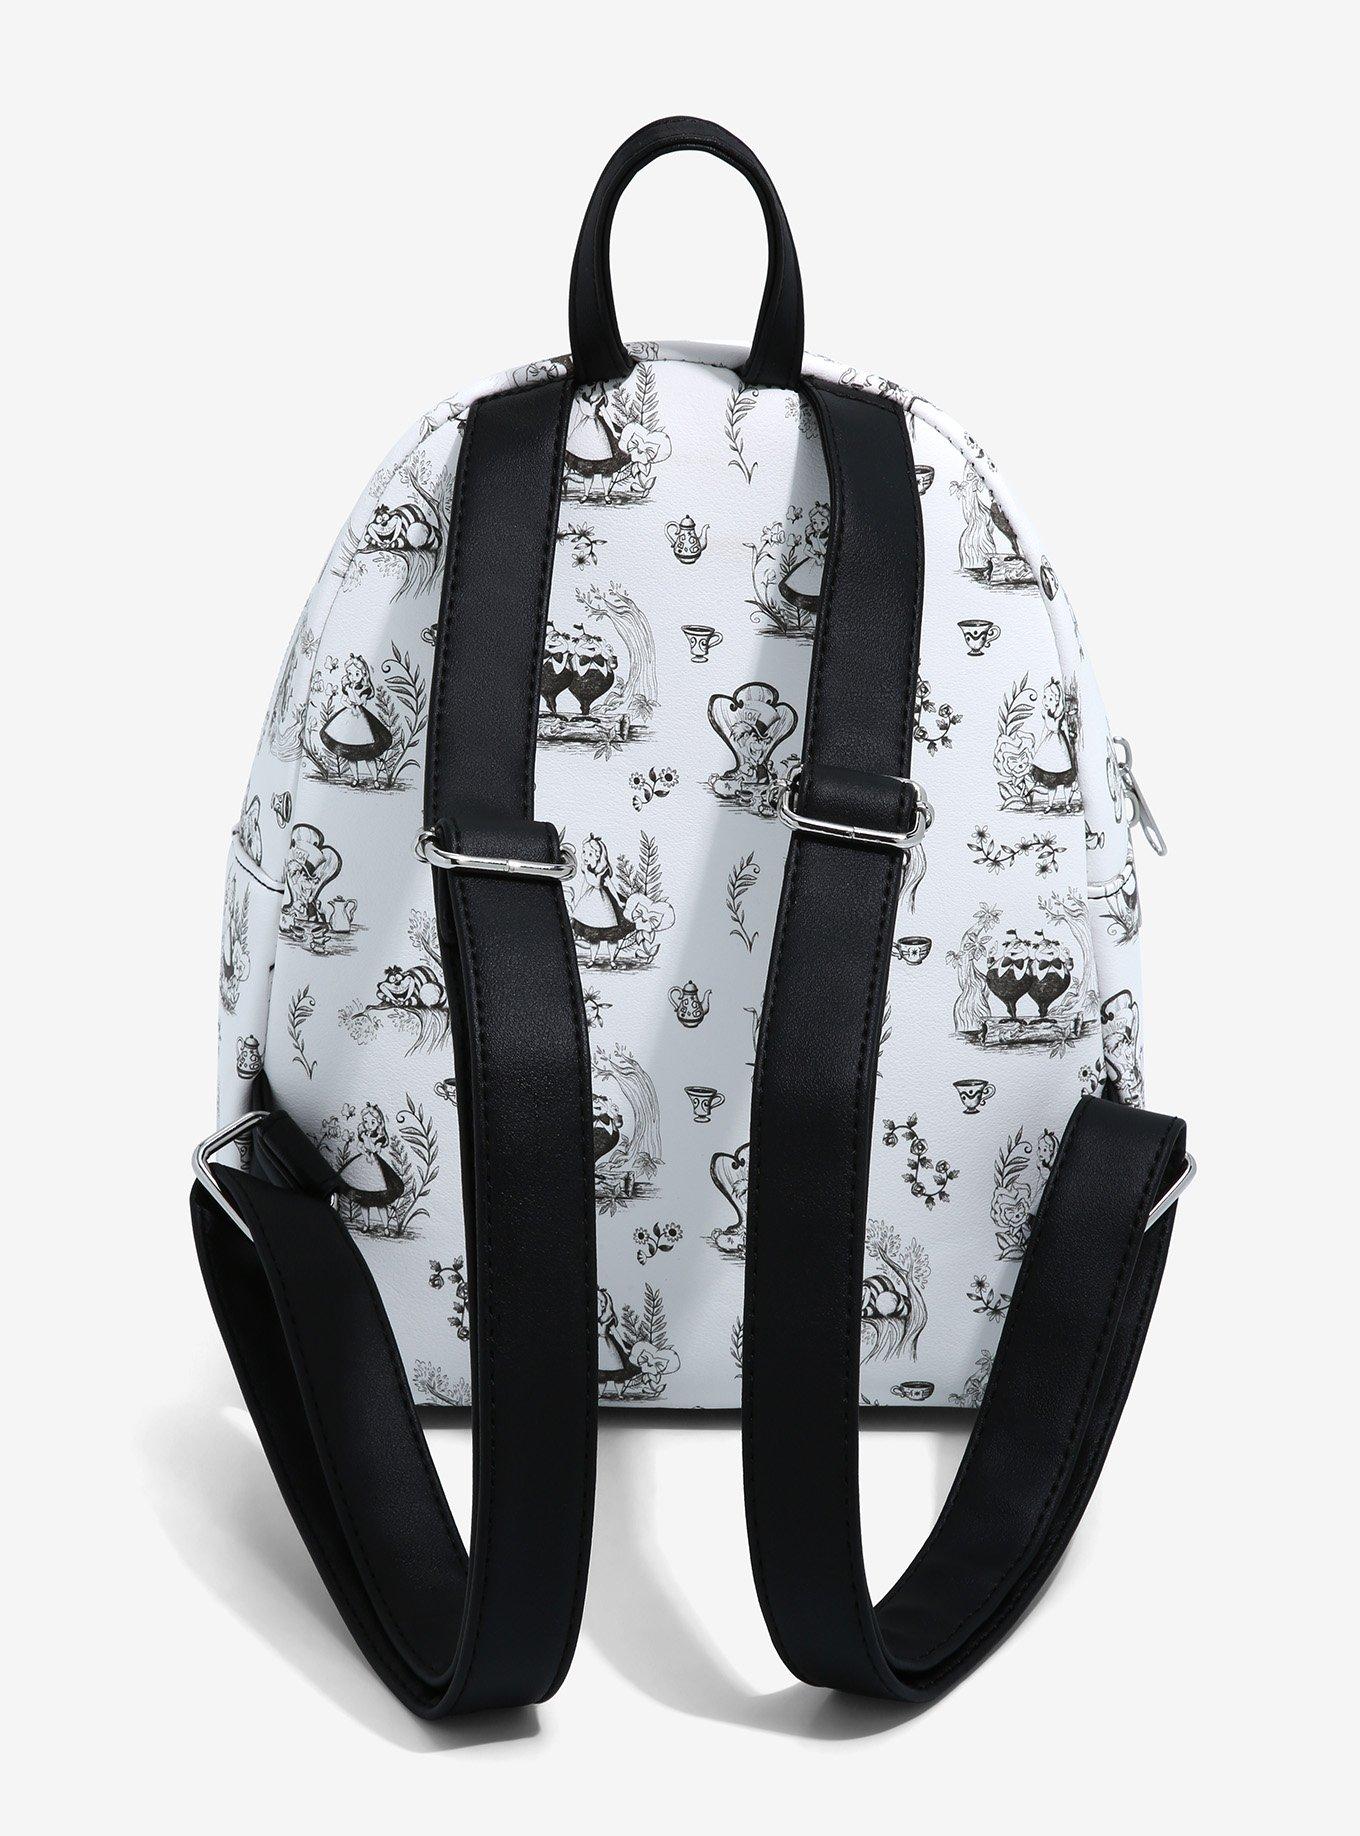 Loungefly Disney Alice In Wonderland Sketch Mini Backpack, , alternate